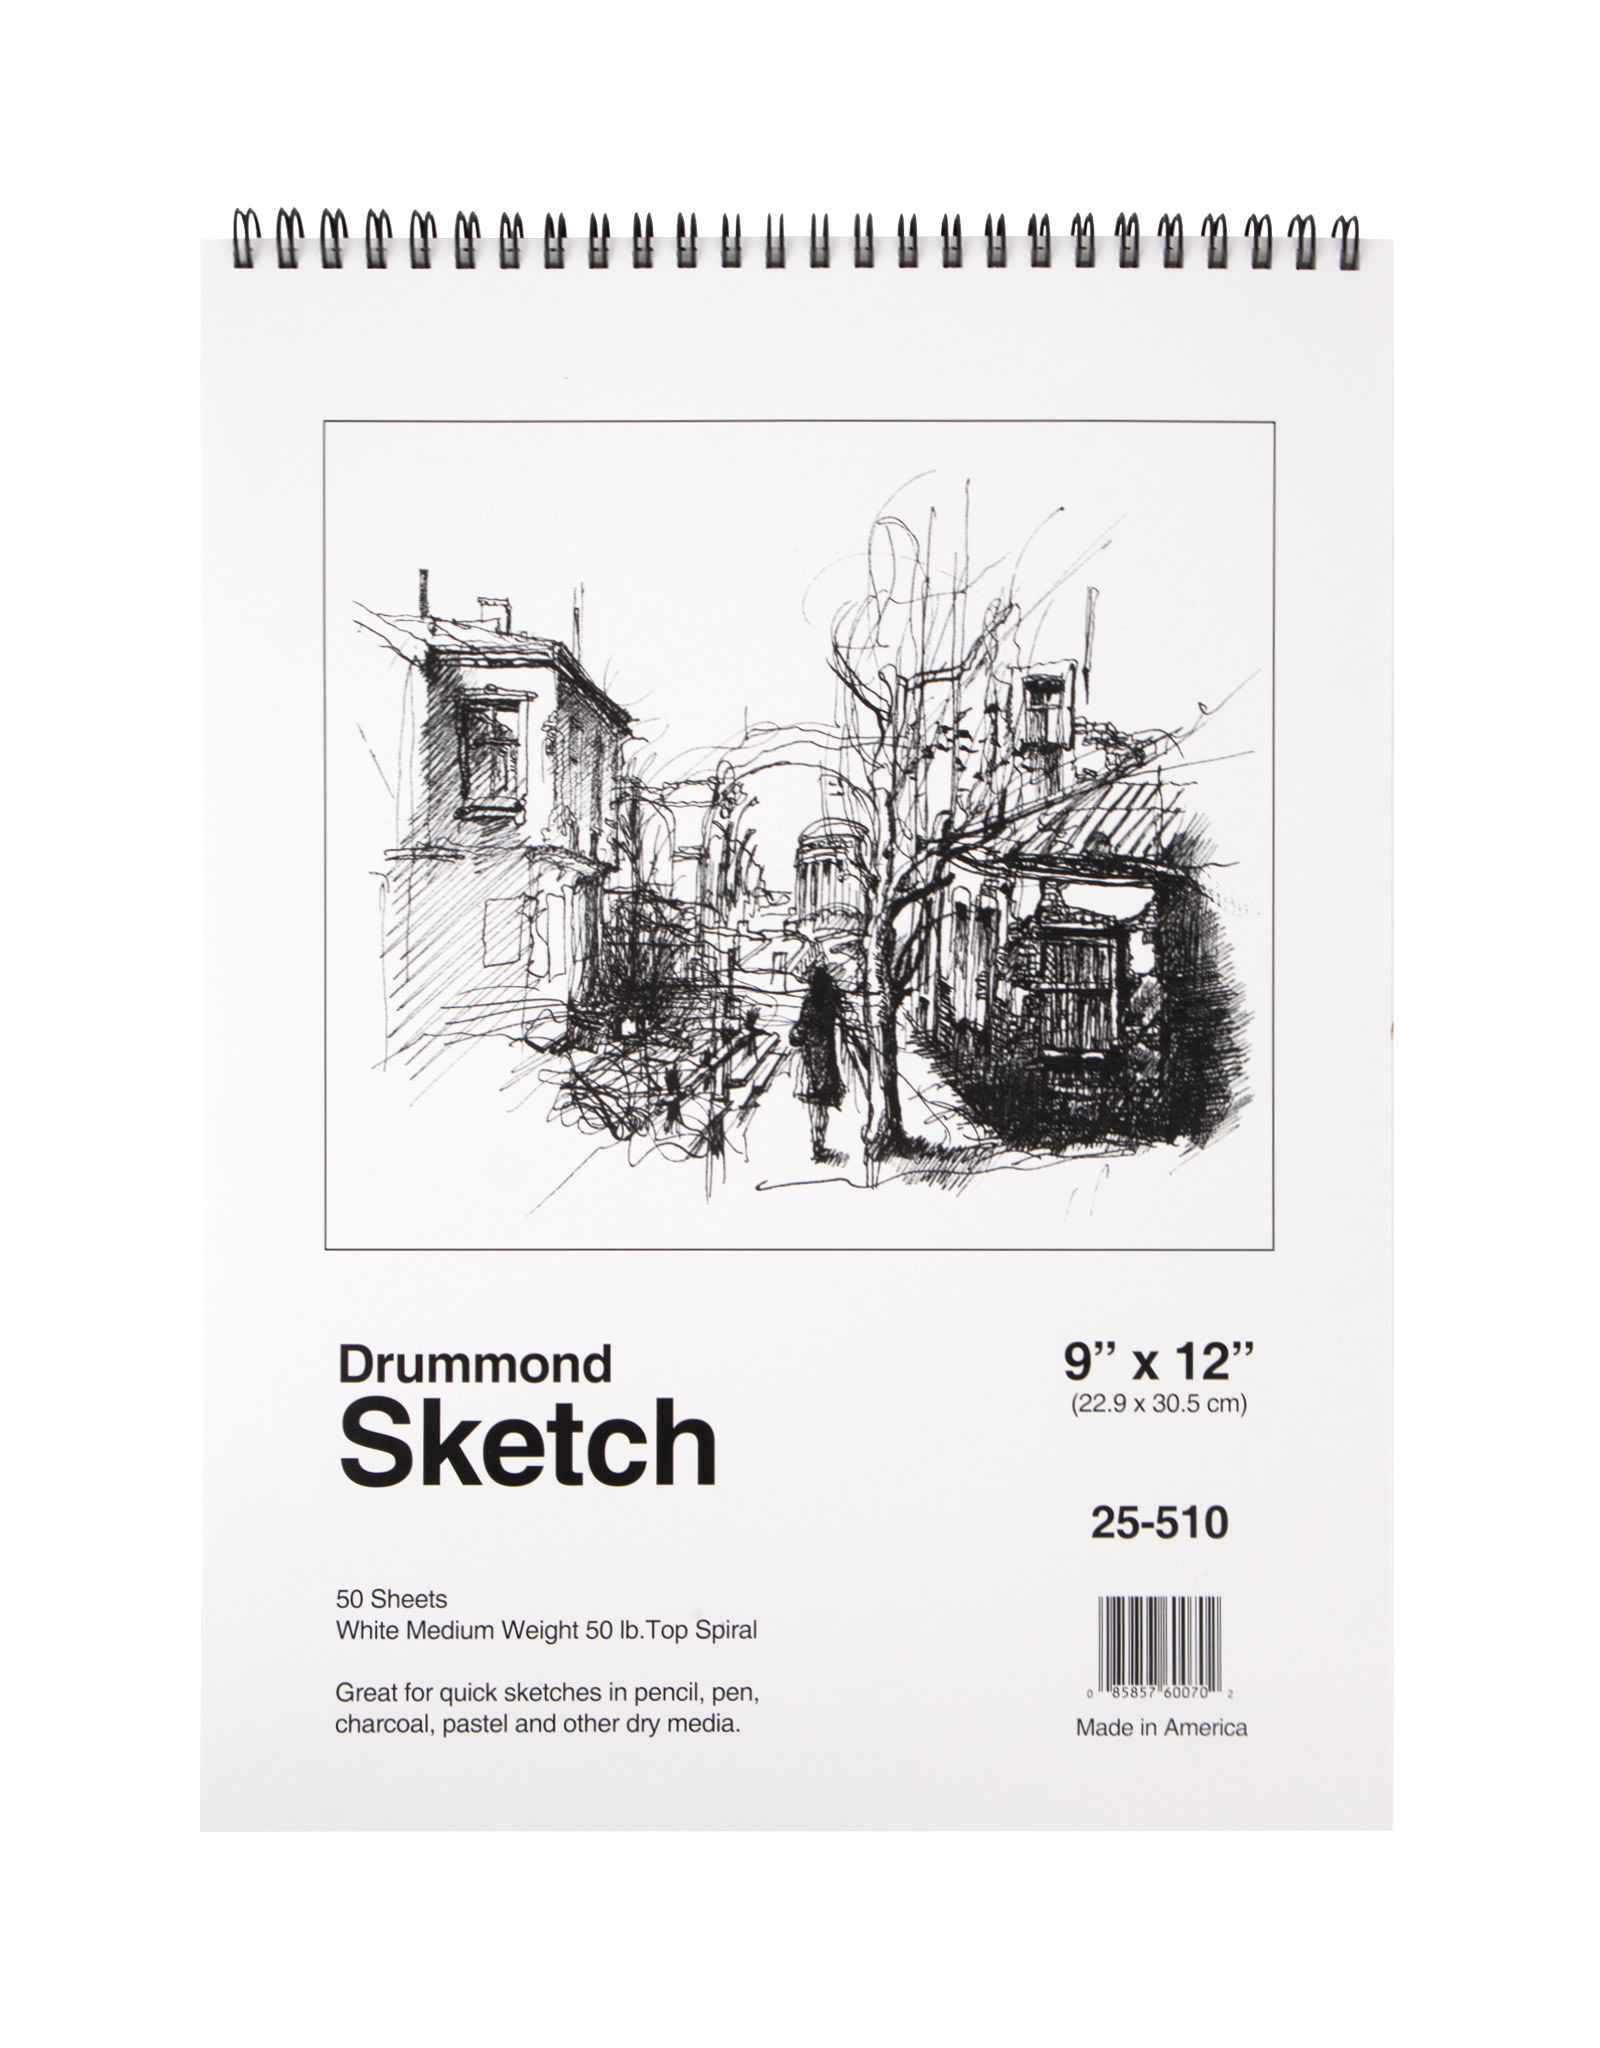 The Street Art Sketchbook Copyright 